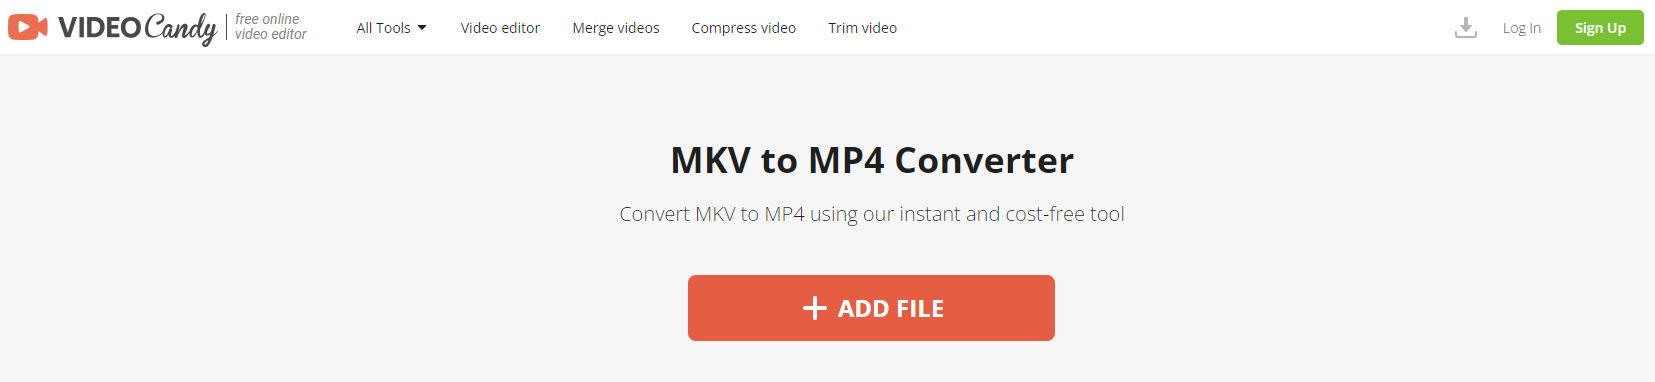 MKV to MP4 converter VideoCandy